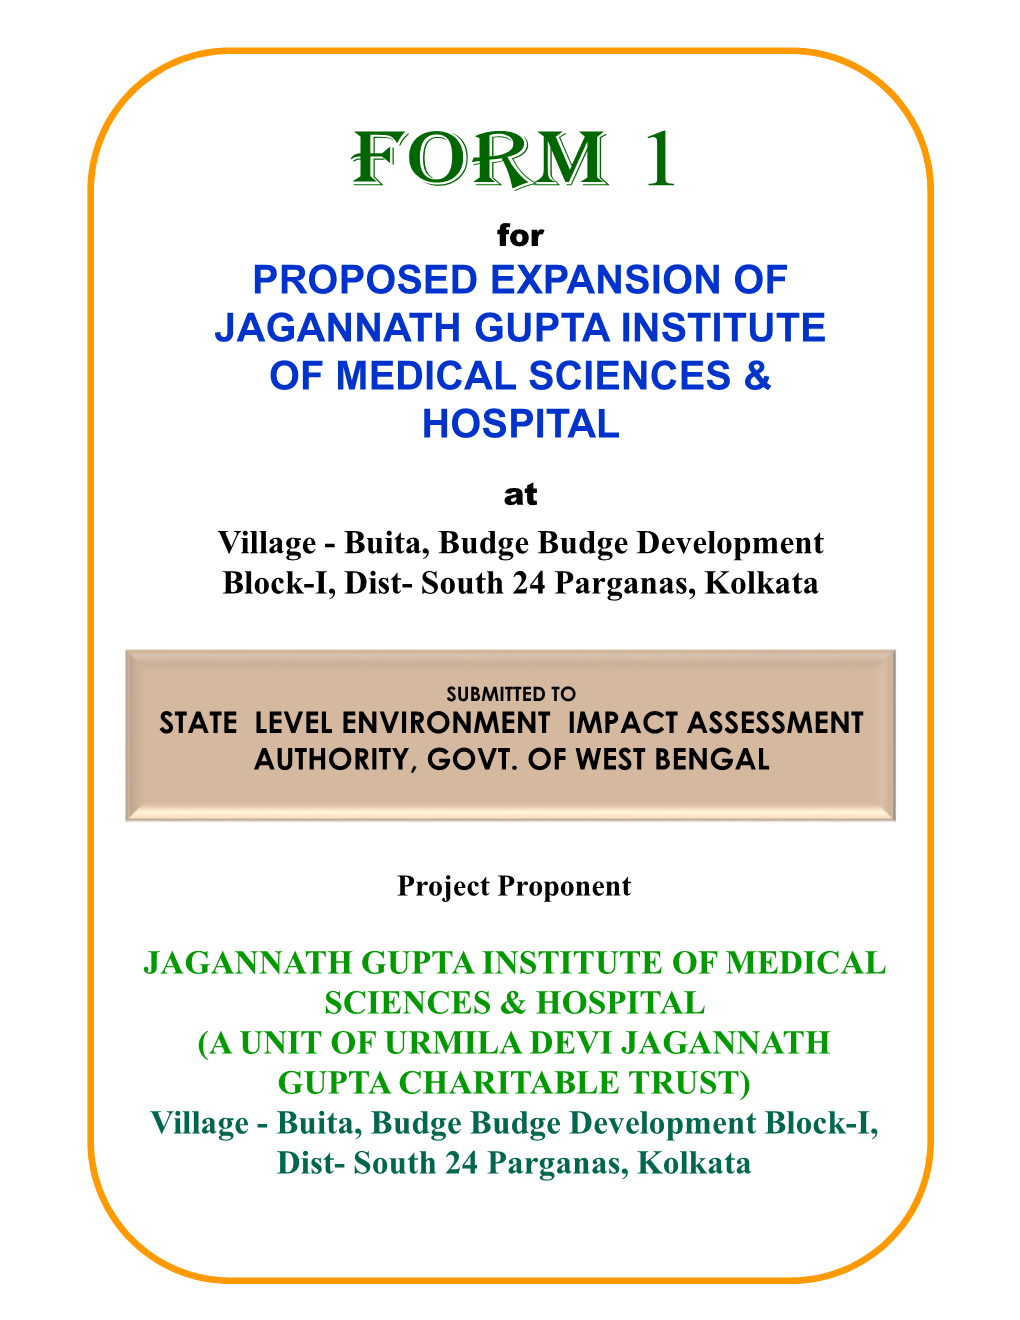 Proposed Expansion of Jagannath Gupta Institute of Medical Sciences & Hospital